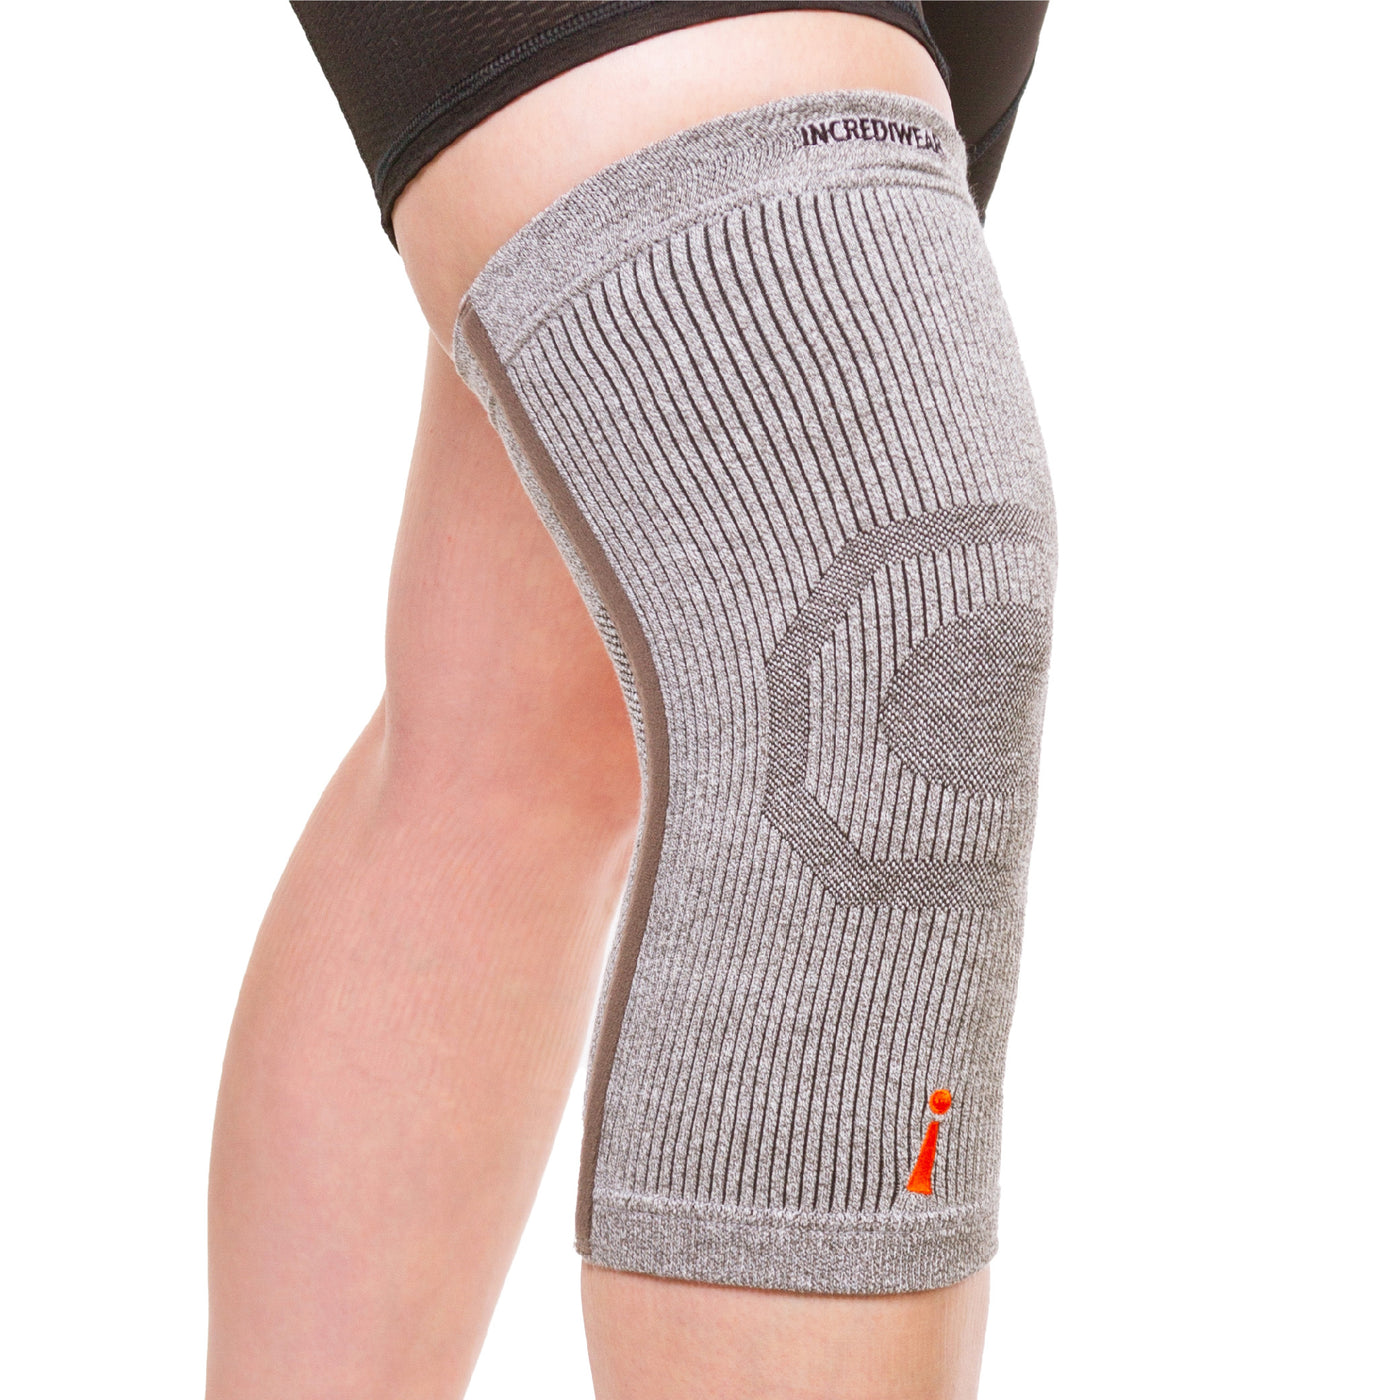 Extra Long Leg Support Knee Sleeves For Basketball, Football, Knee Pain,  Exercise 